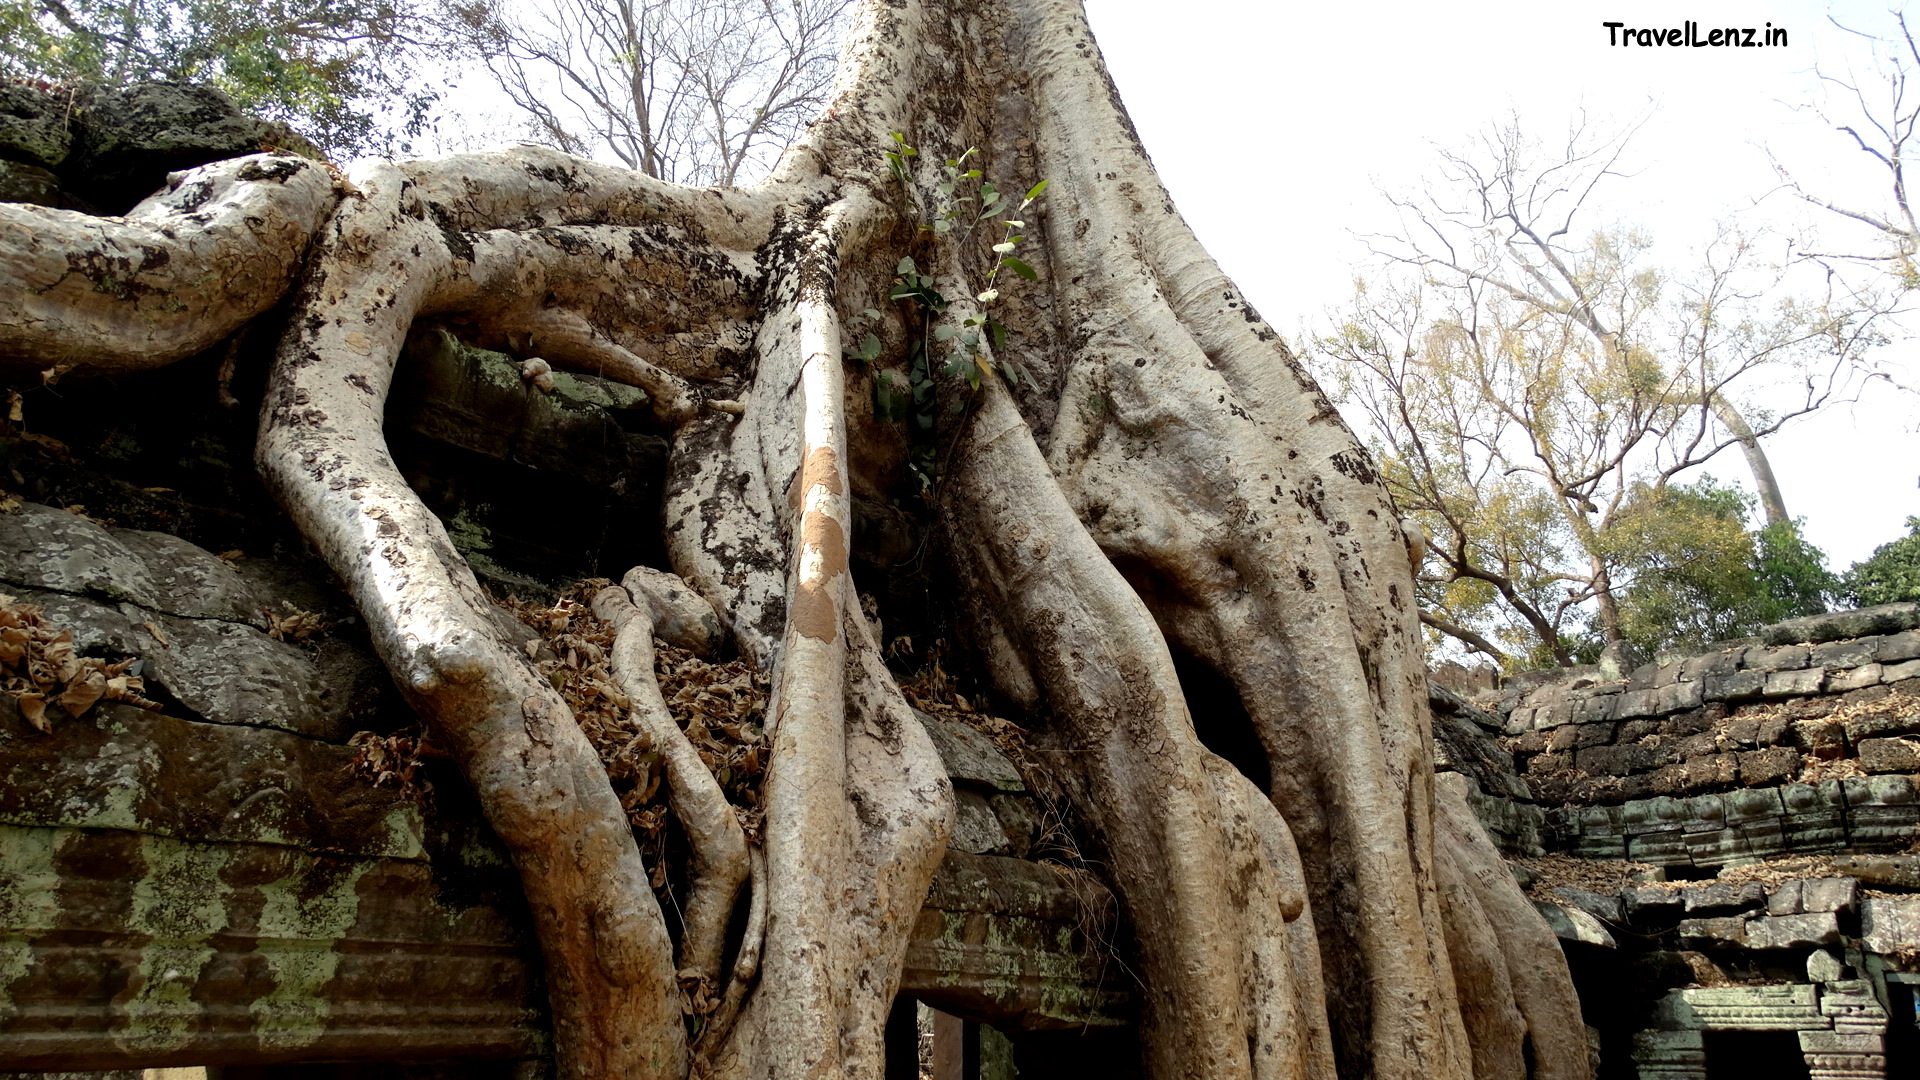 The giant strangler trees at Ta Prohm